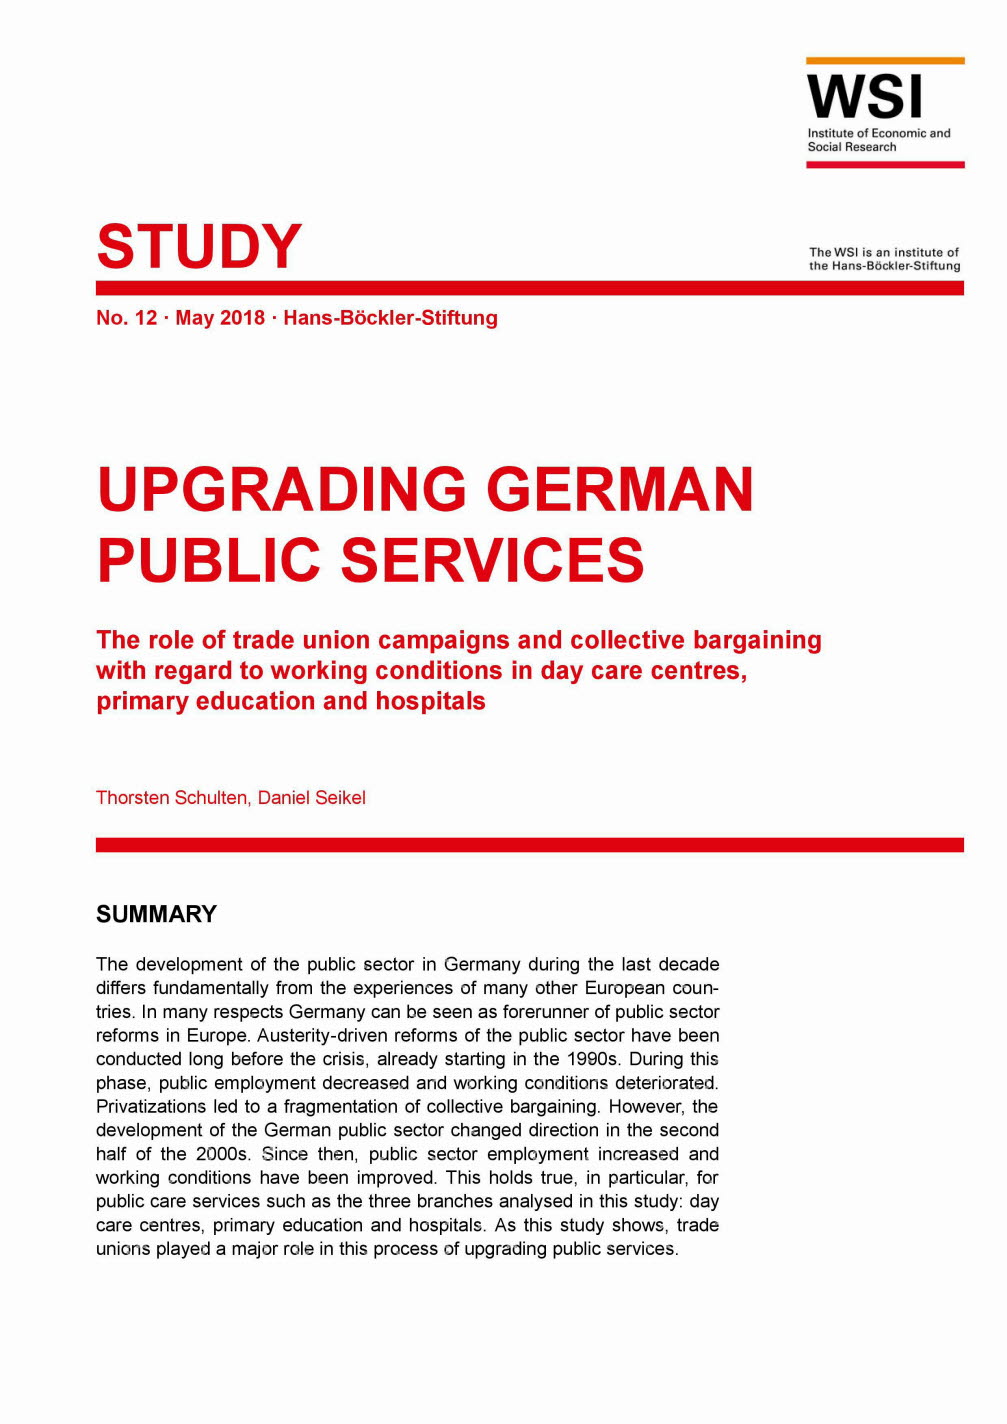 Upgrading German public services